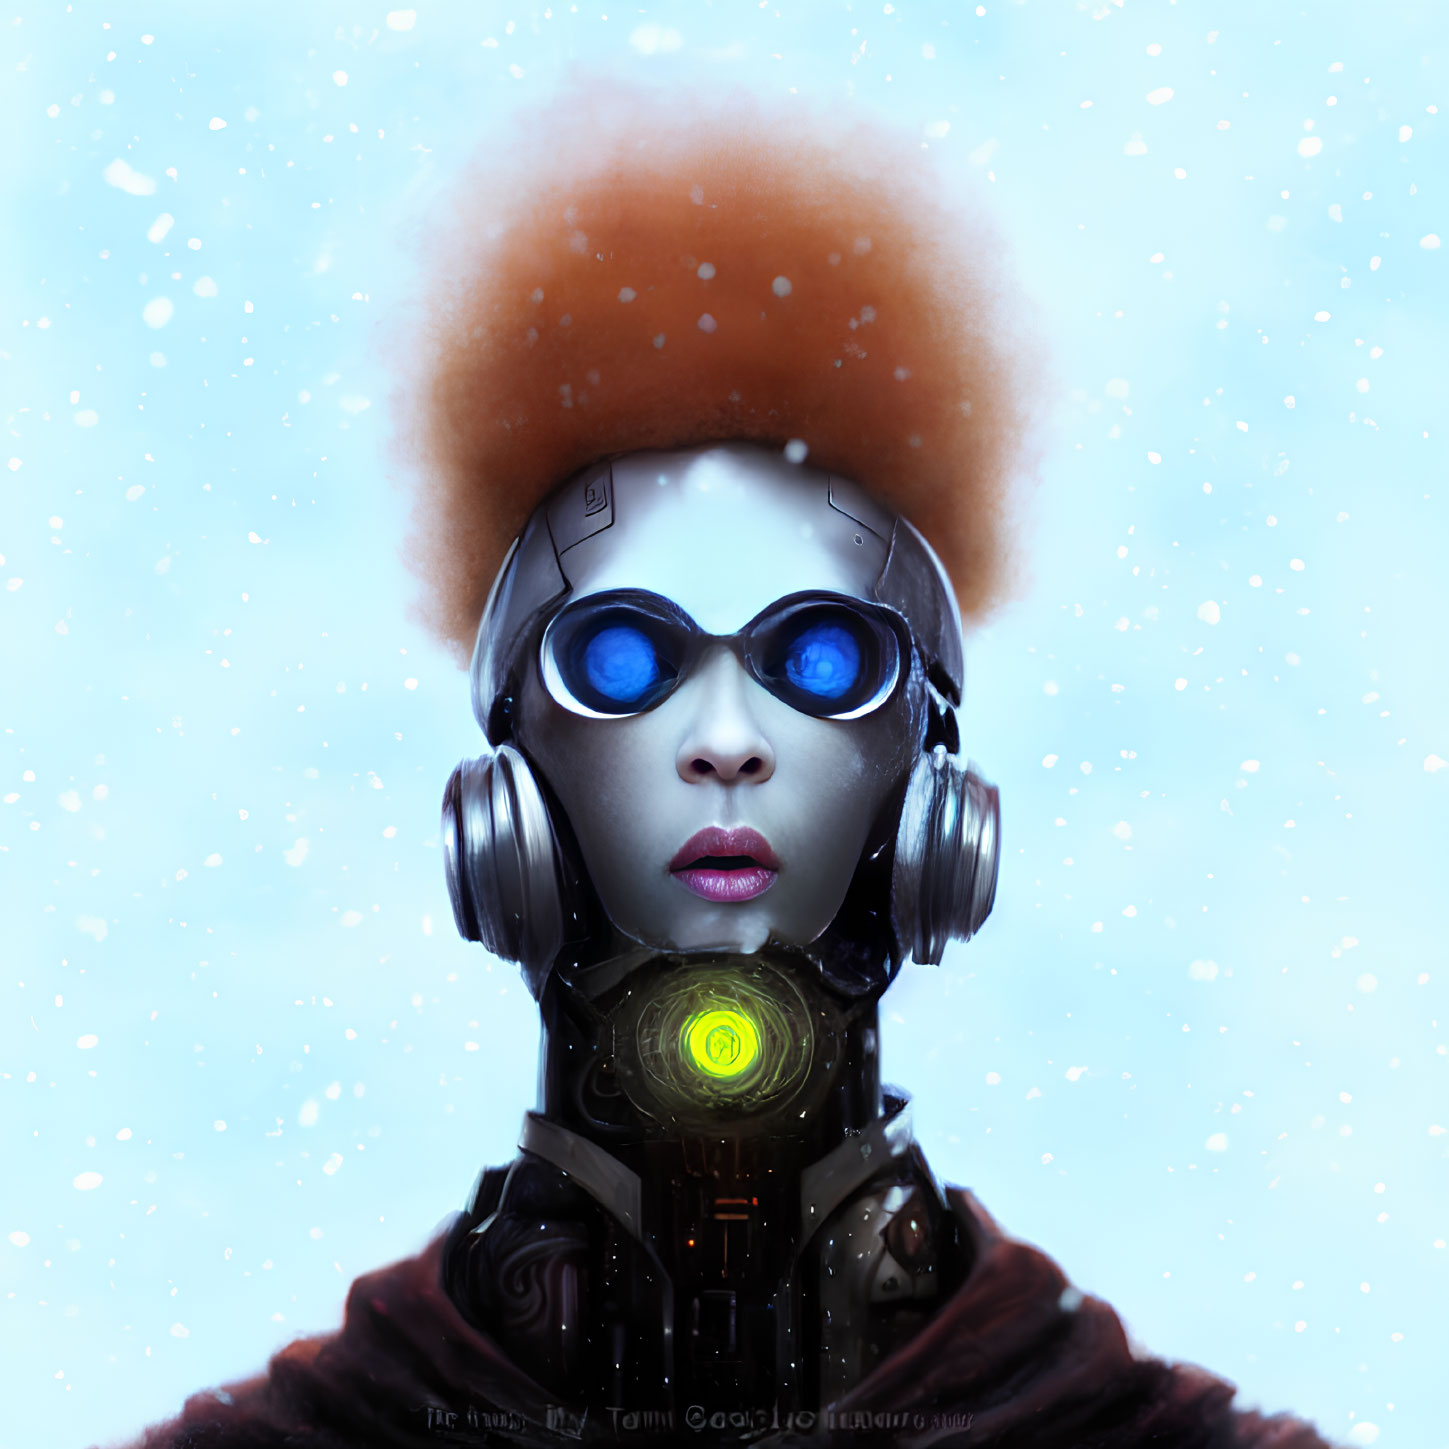 Woman in Afro with Futuristic Goggles and Sci-Fi Armor in Snowy Scene